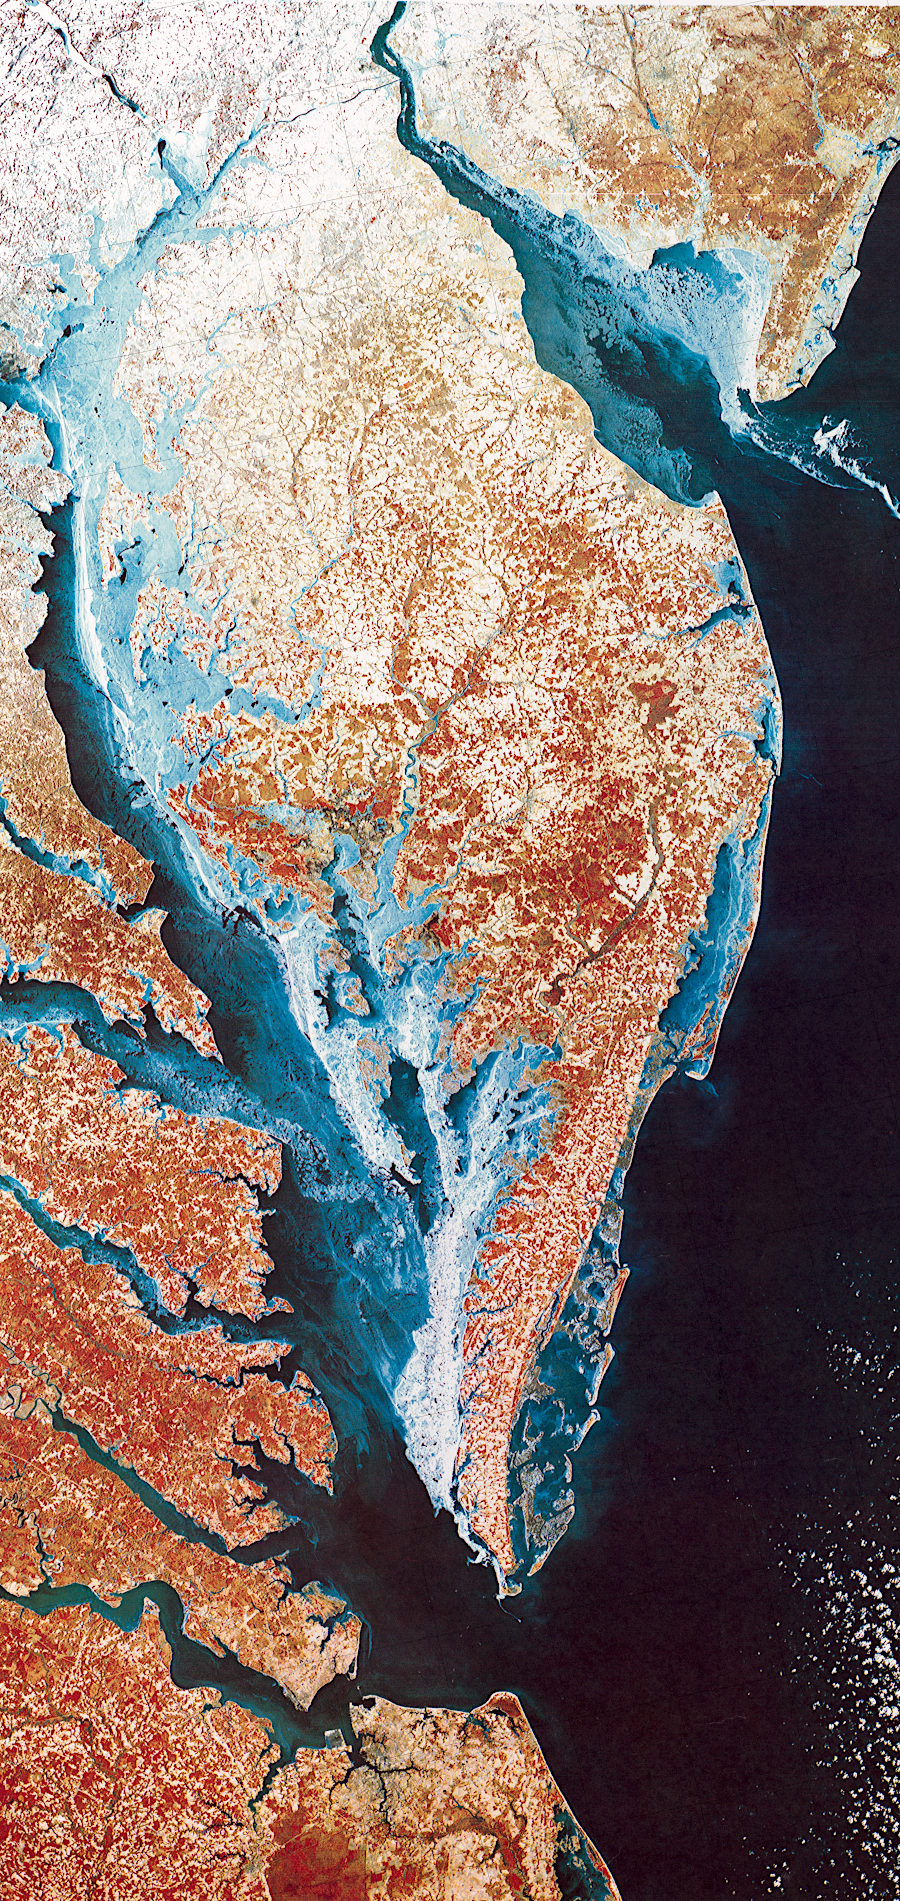 LANDSAT image of Chesapeake Bay and Delaware Bay